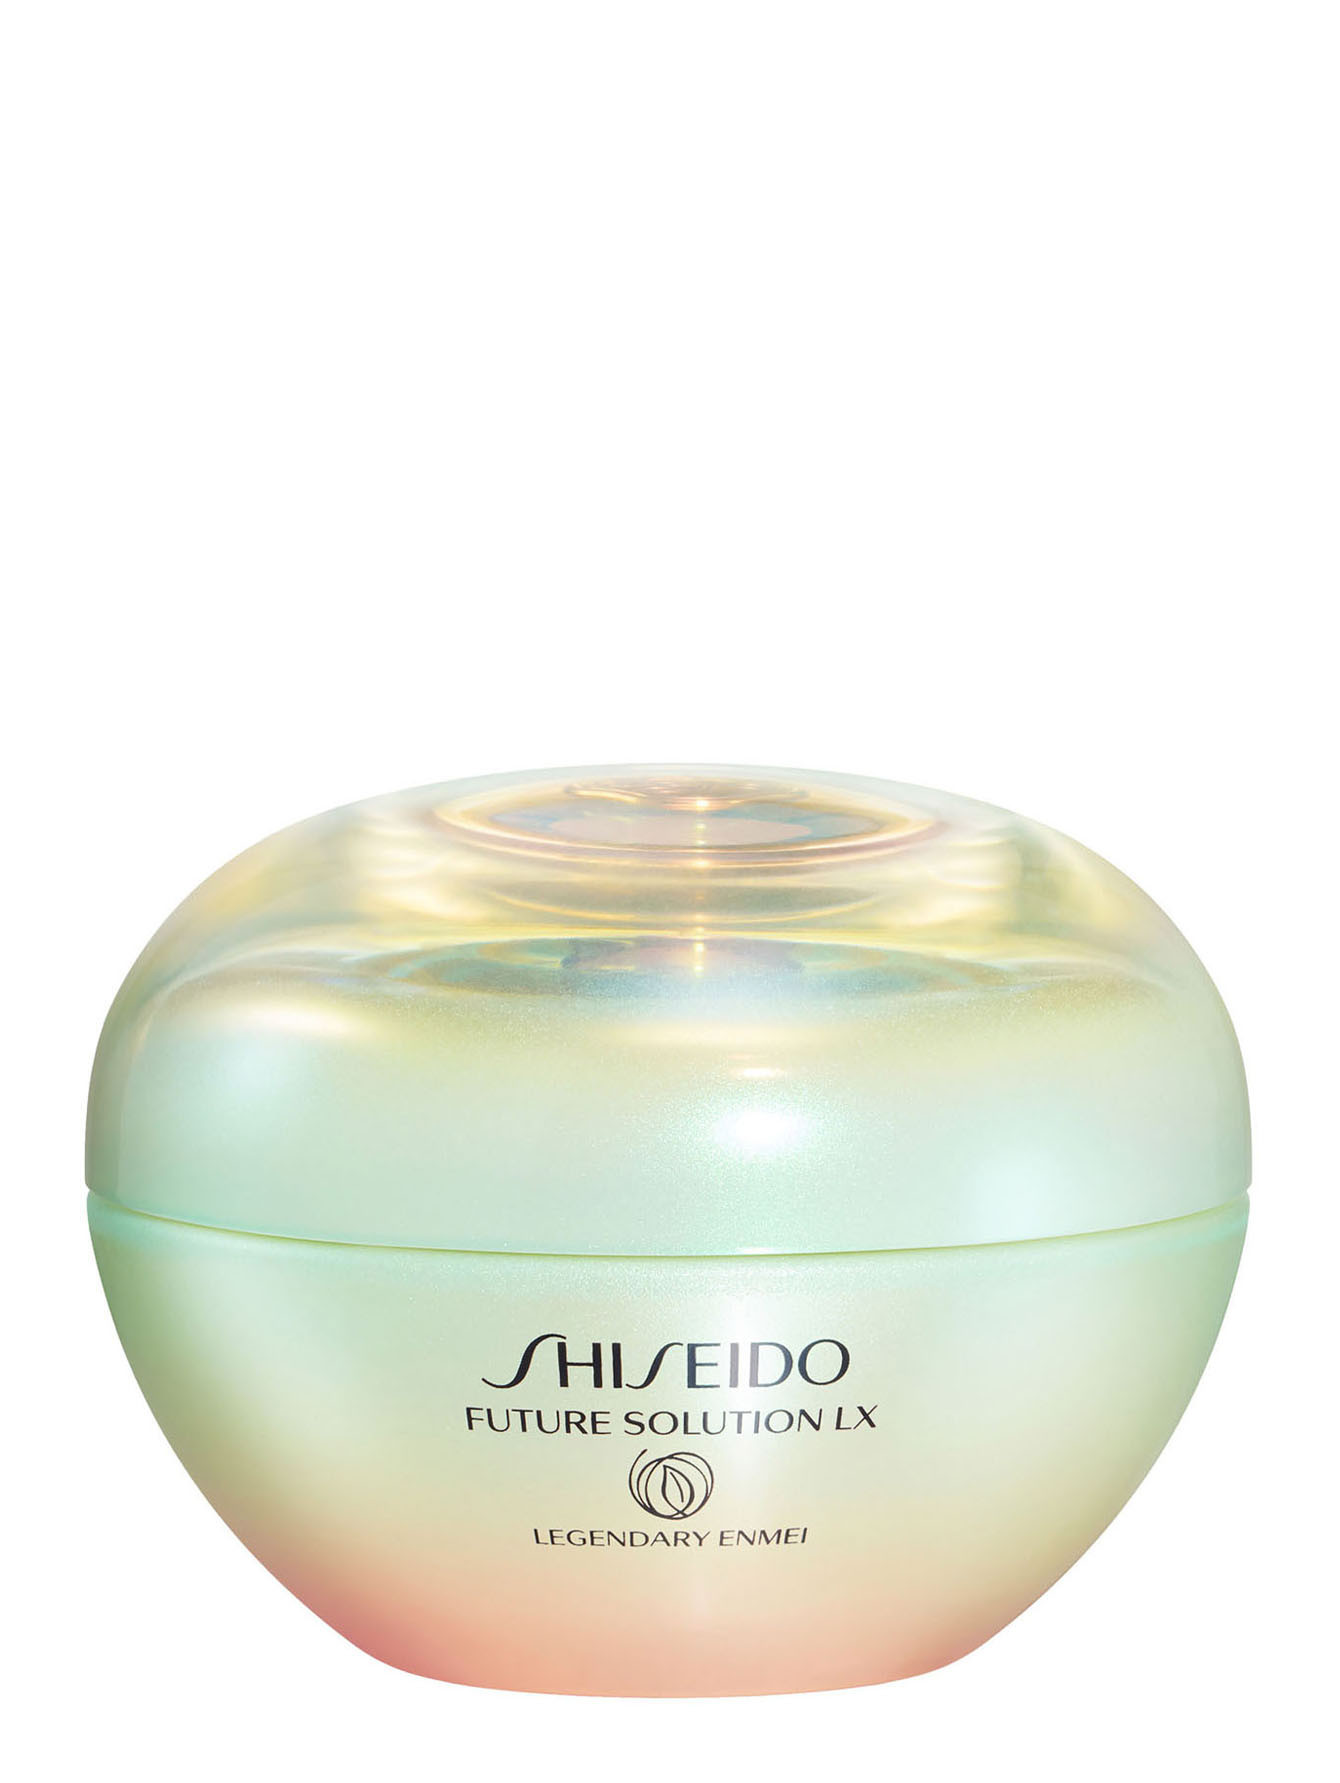 Shiseido solution. Shiseido Future solution LX. Крем Shiseido Future solution. Shiseido cыворотка для здорового сияния кожи Legendary Enmei Future solution LX. Future solution Legendary Cream.